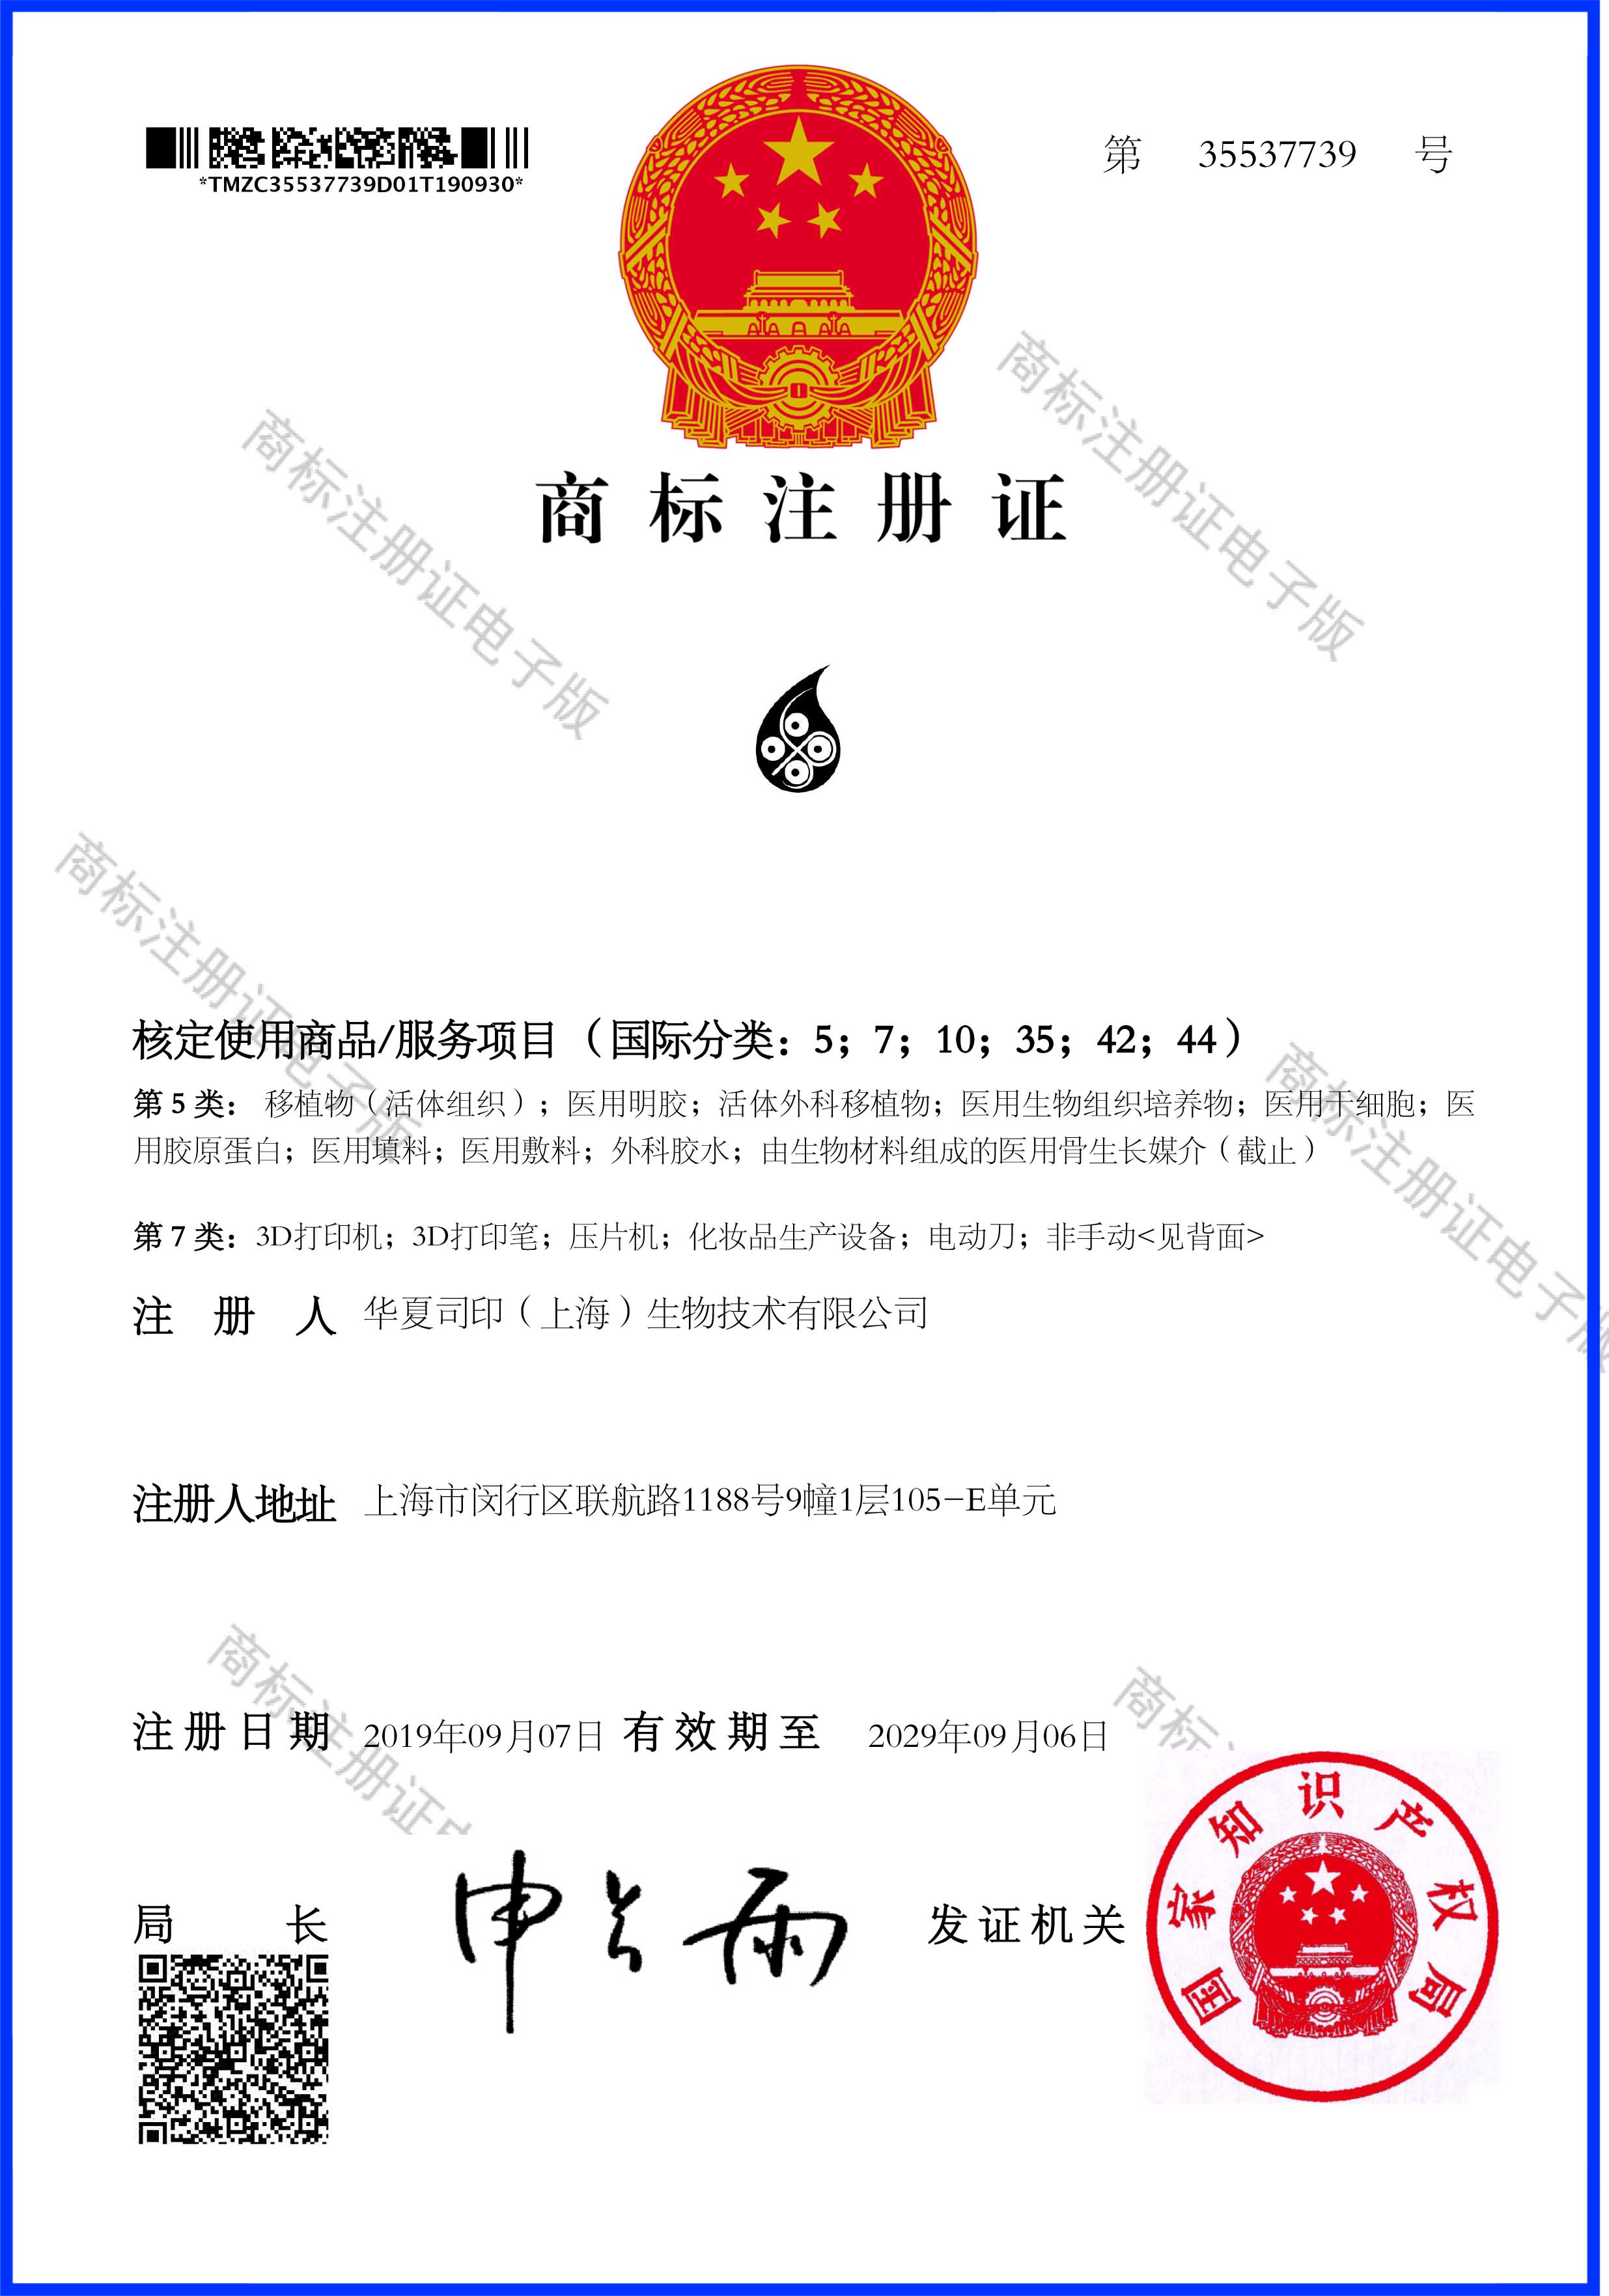 LOGO trademark certificate